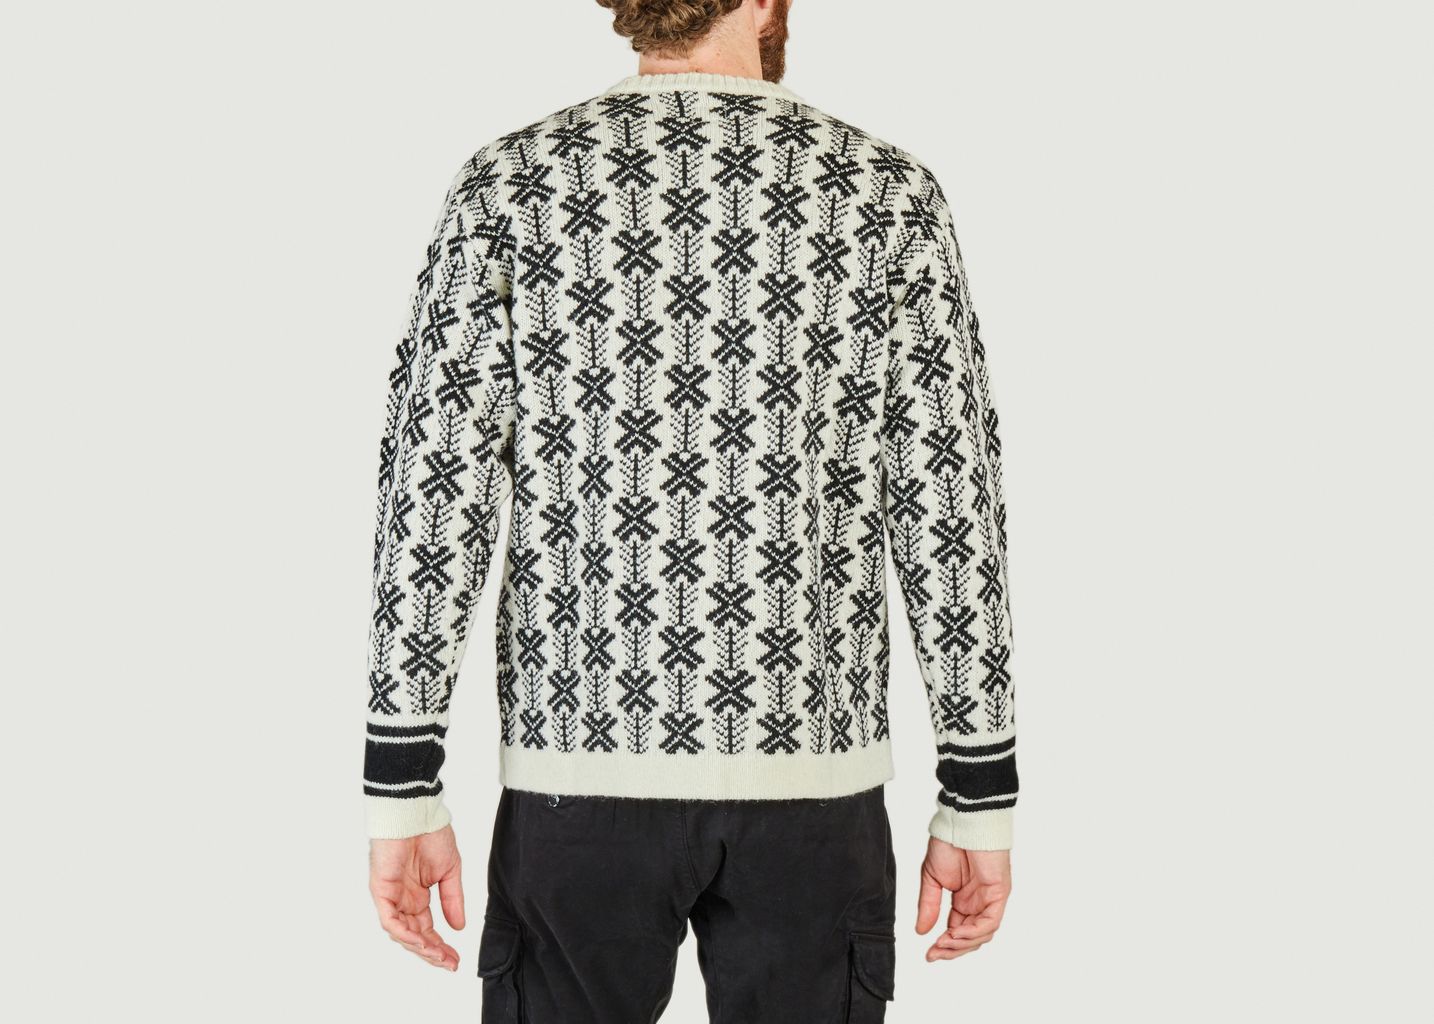 Virgin wool sweater - C.P. COMPANY